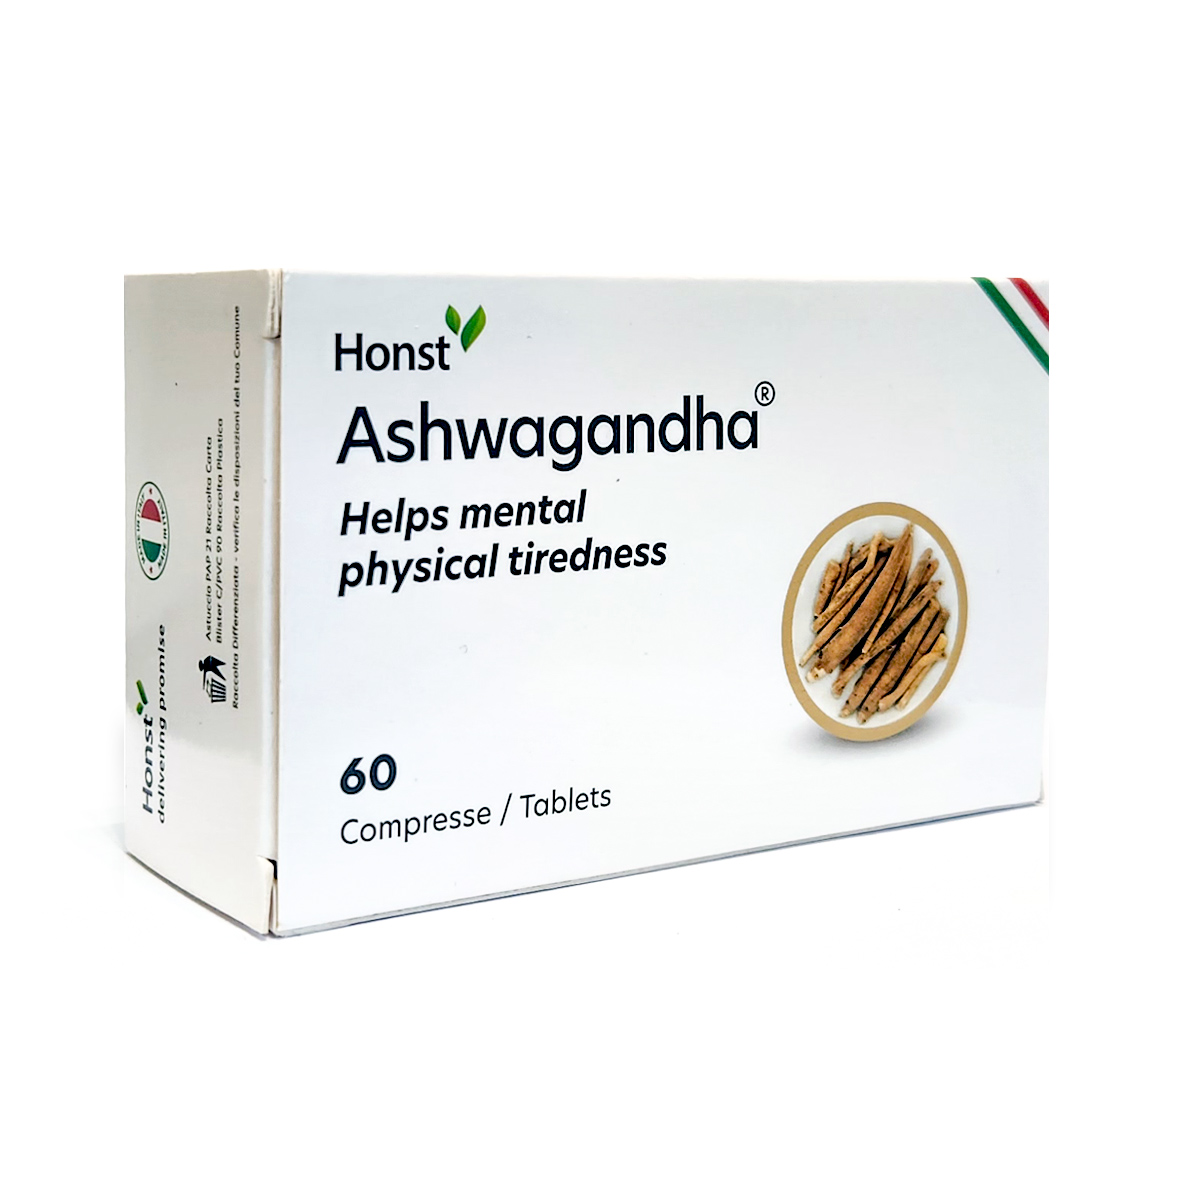 Honst- Ashwagandha - 60 Tabs - Helps mental & physical tiredness.